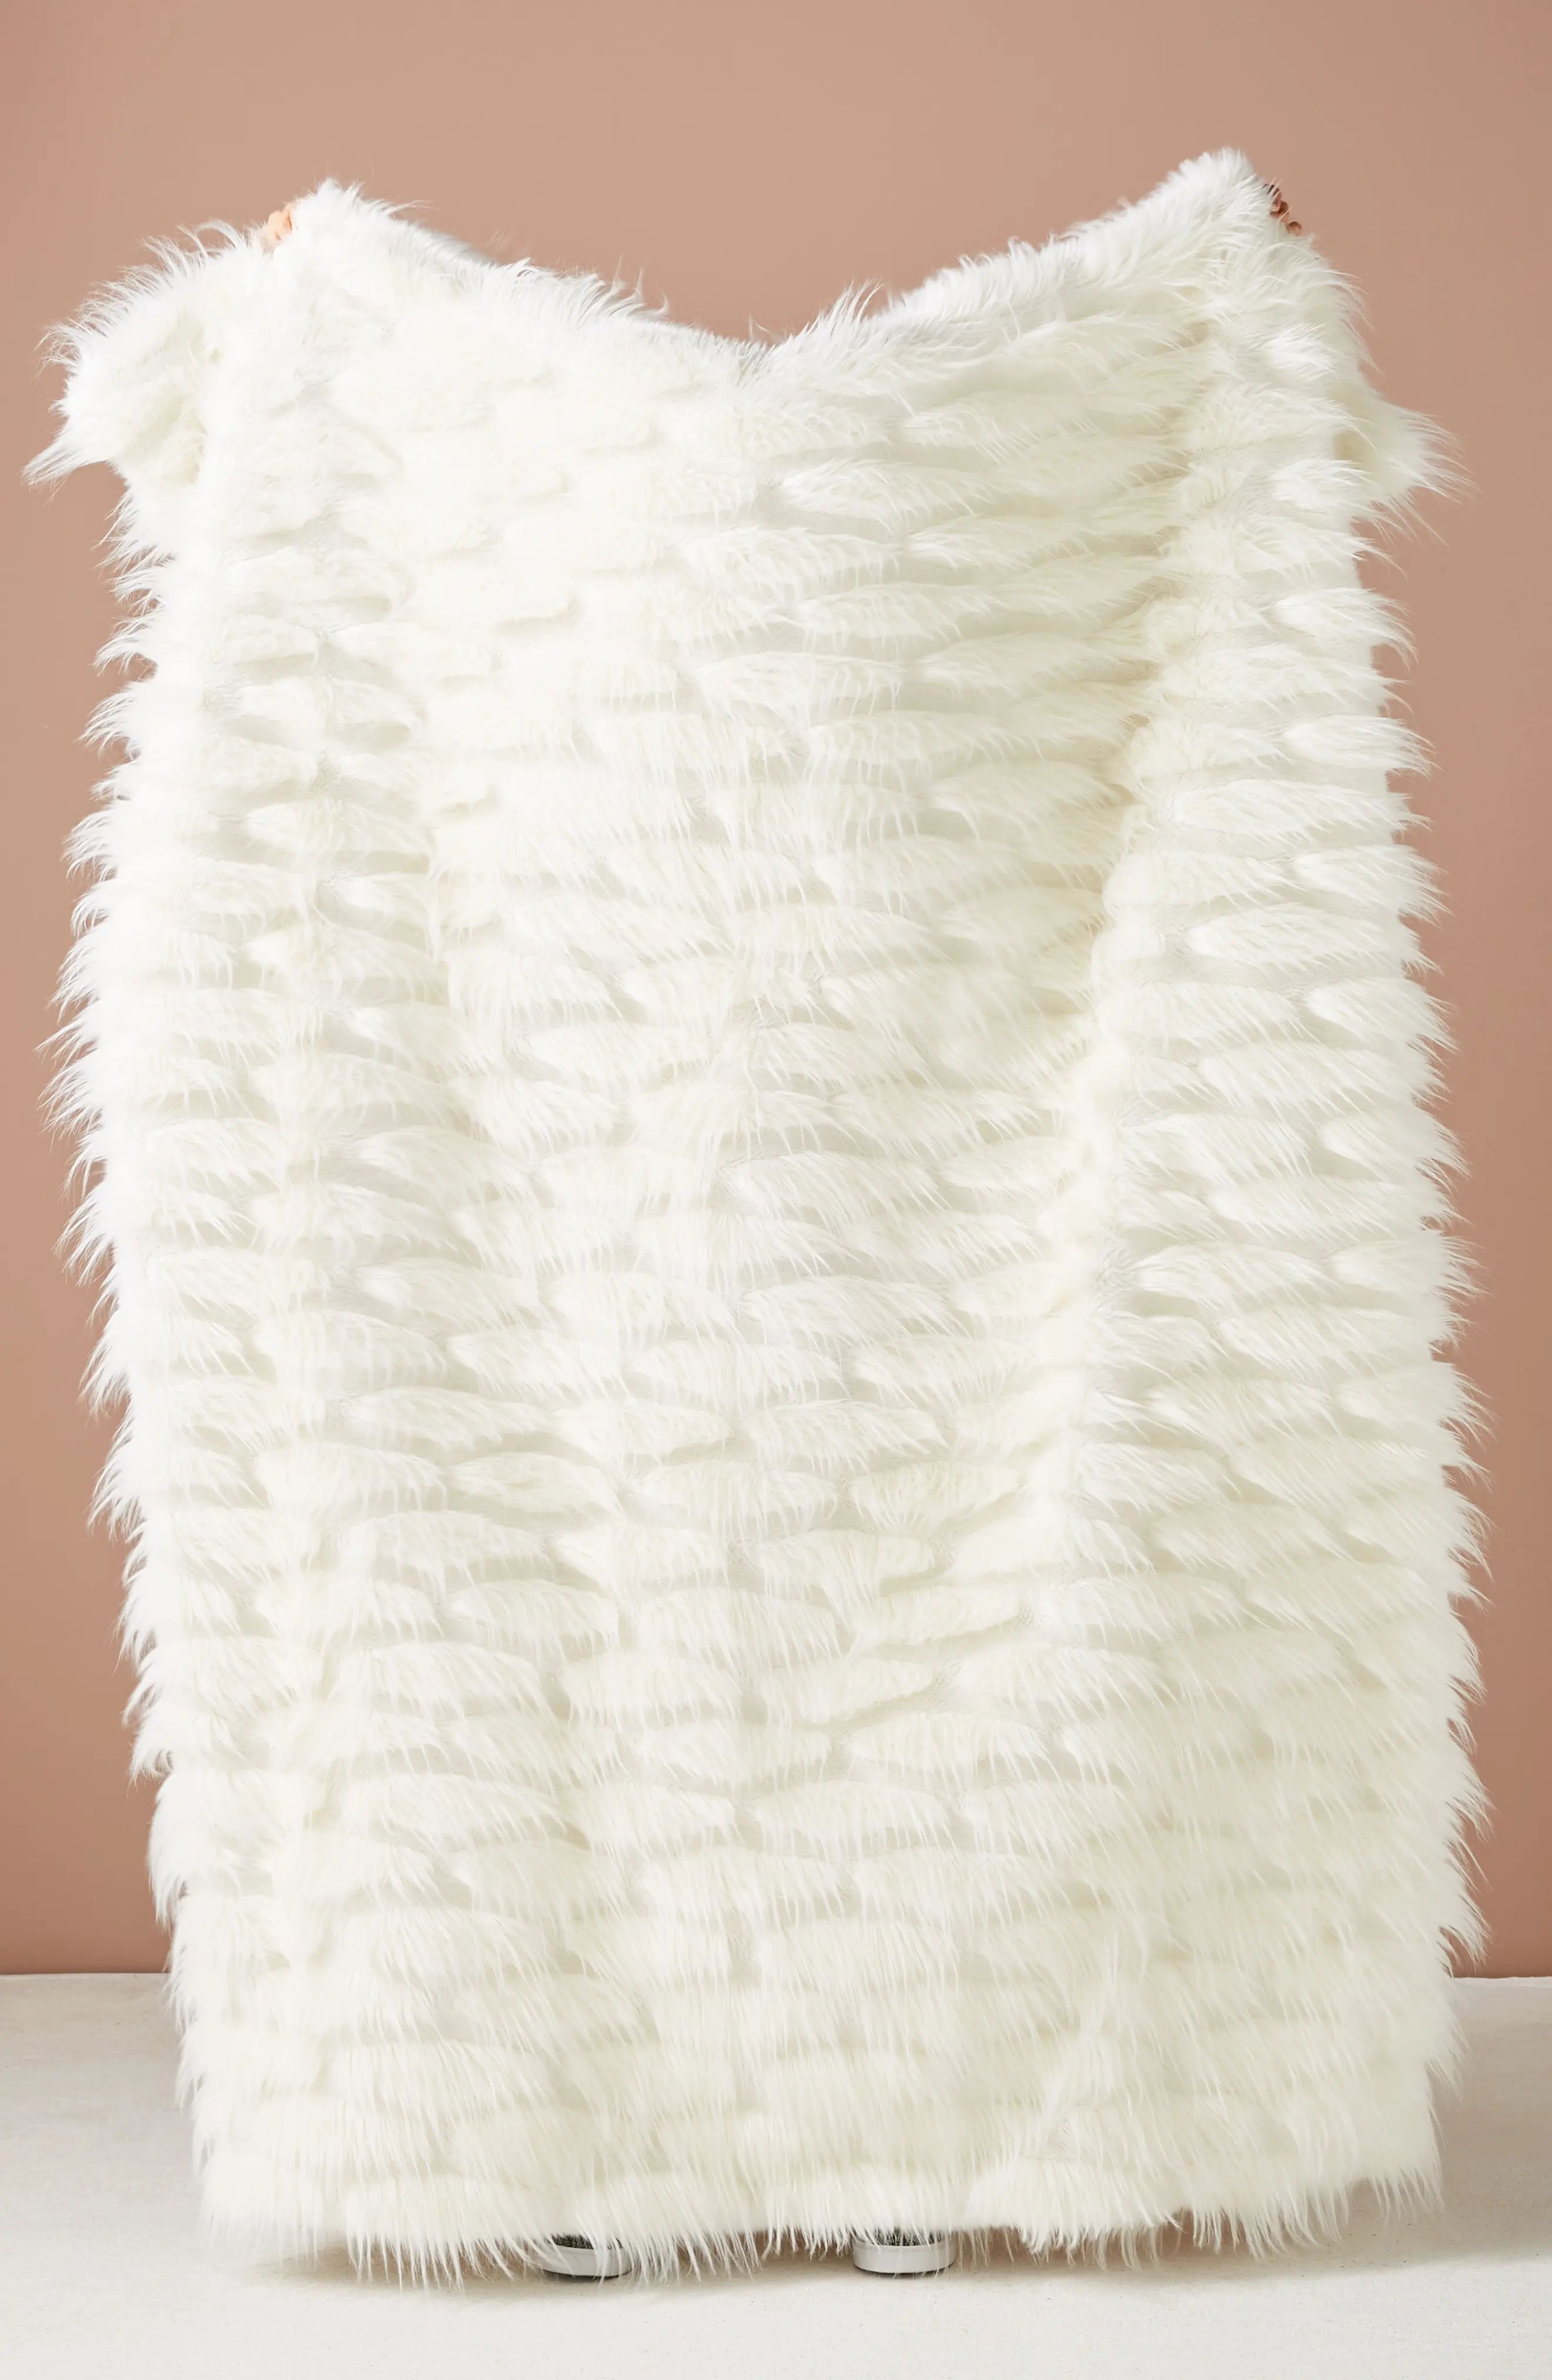 Anthropologie Faux Fur Throw Blanket | Nordstrom